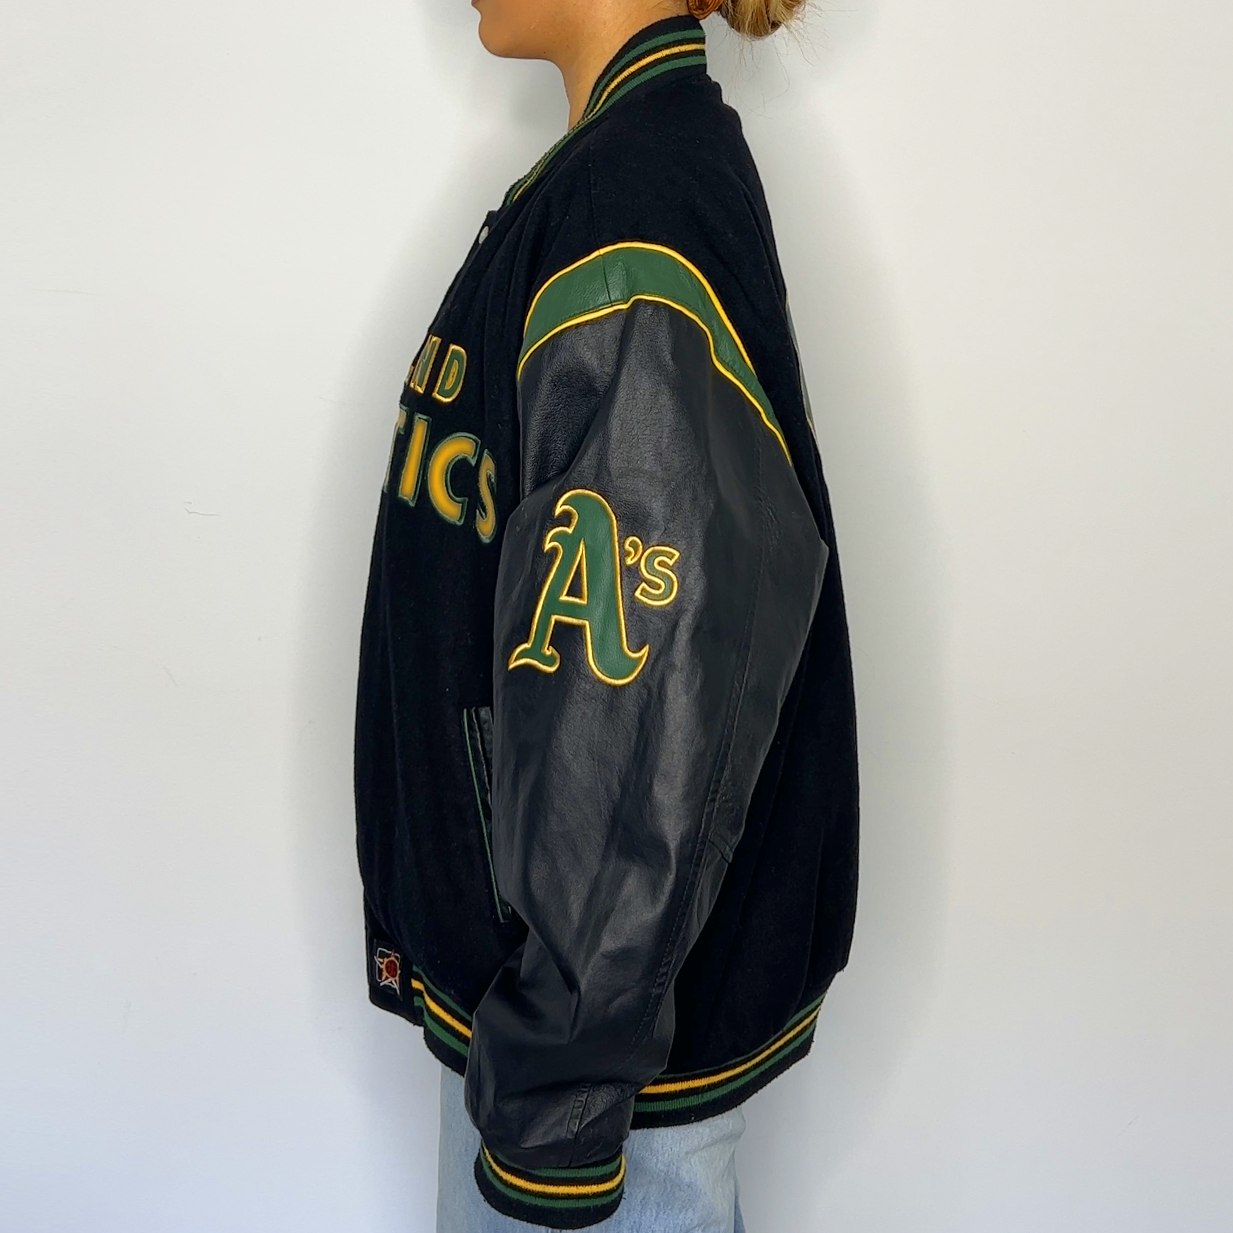 Oakland Athletics Reversible Jacket | JH Design